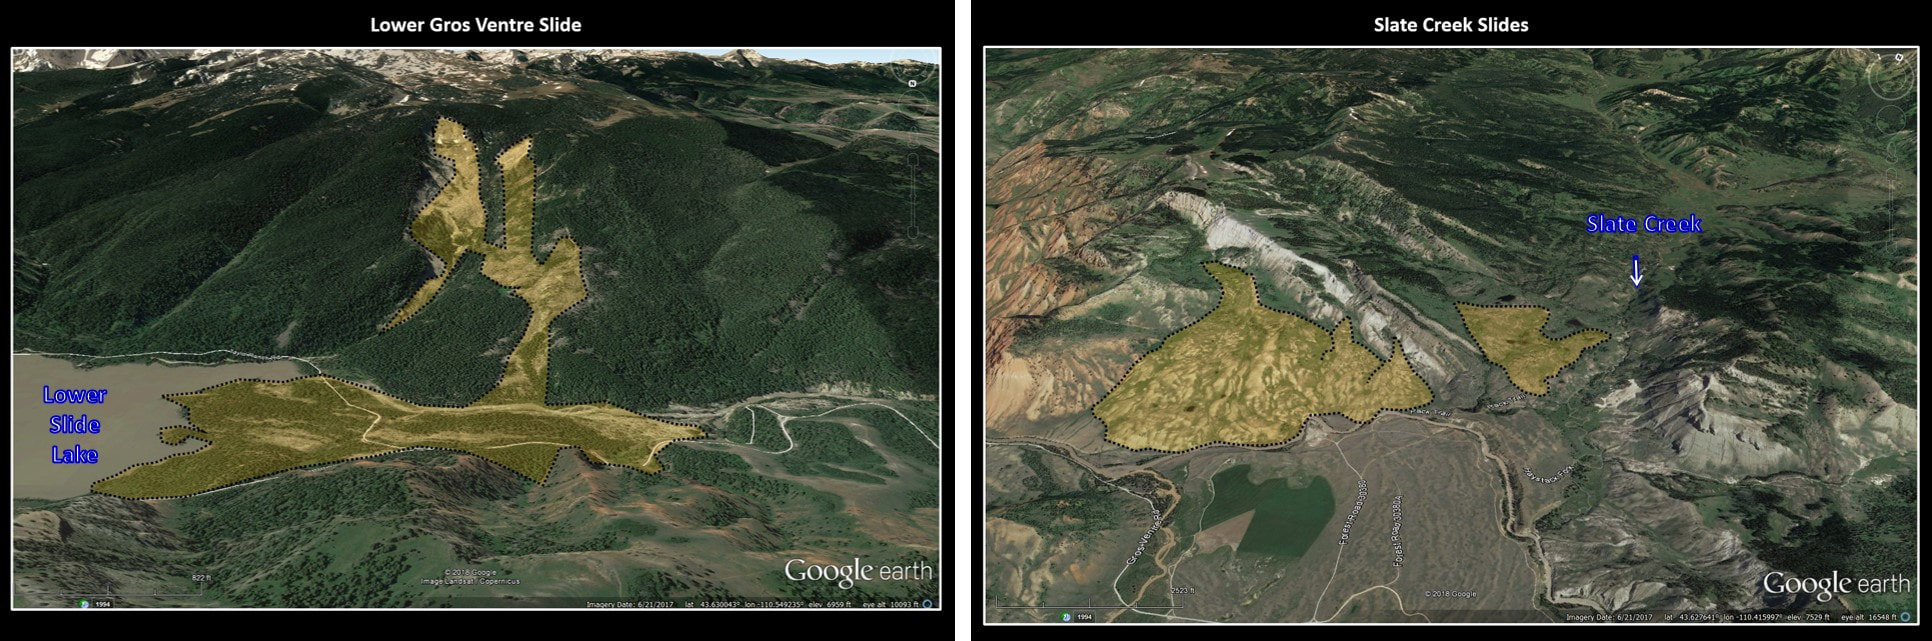 Aerial view of Lower Gros Ventre Landslide and Slate Creek Landslides, Wyoming